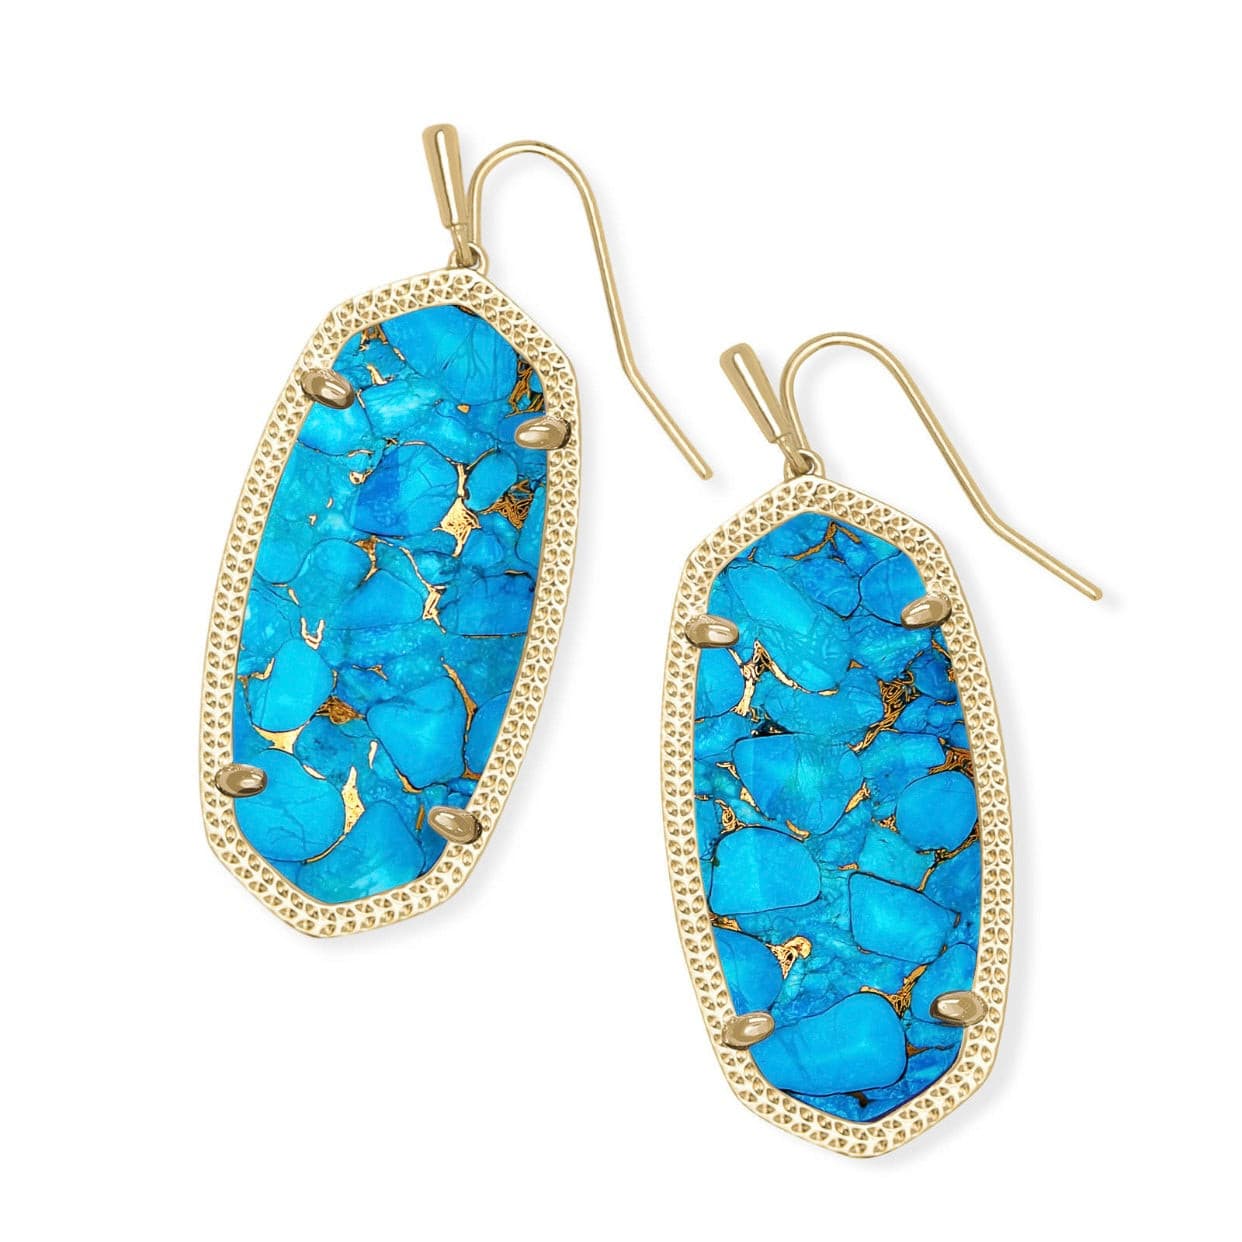 Kendra Scott-Elle Gold Drop Earrings In Bronze Veined Turquoise Magnesite - Bliss Boutique 